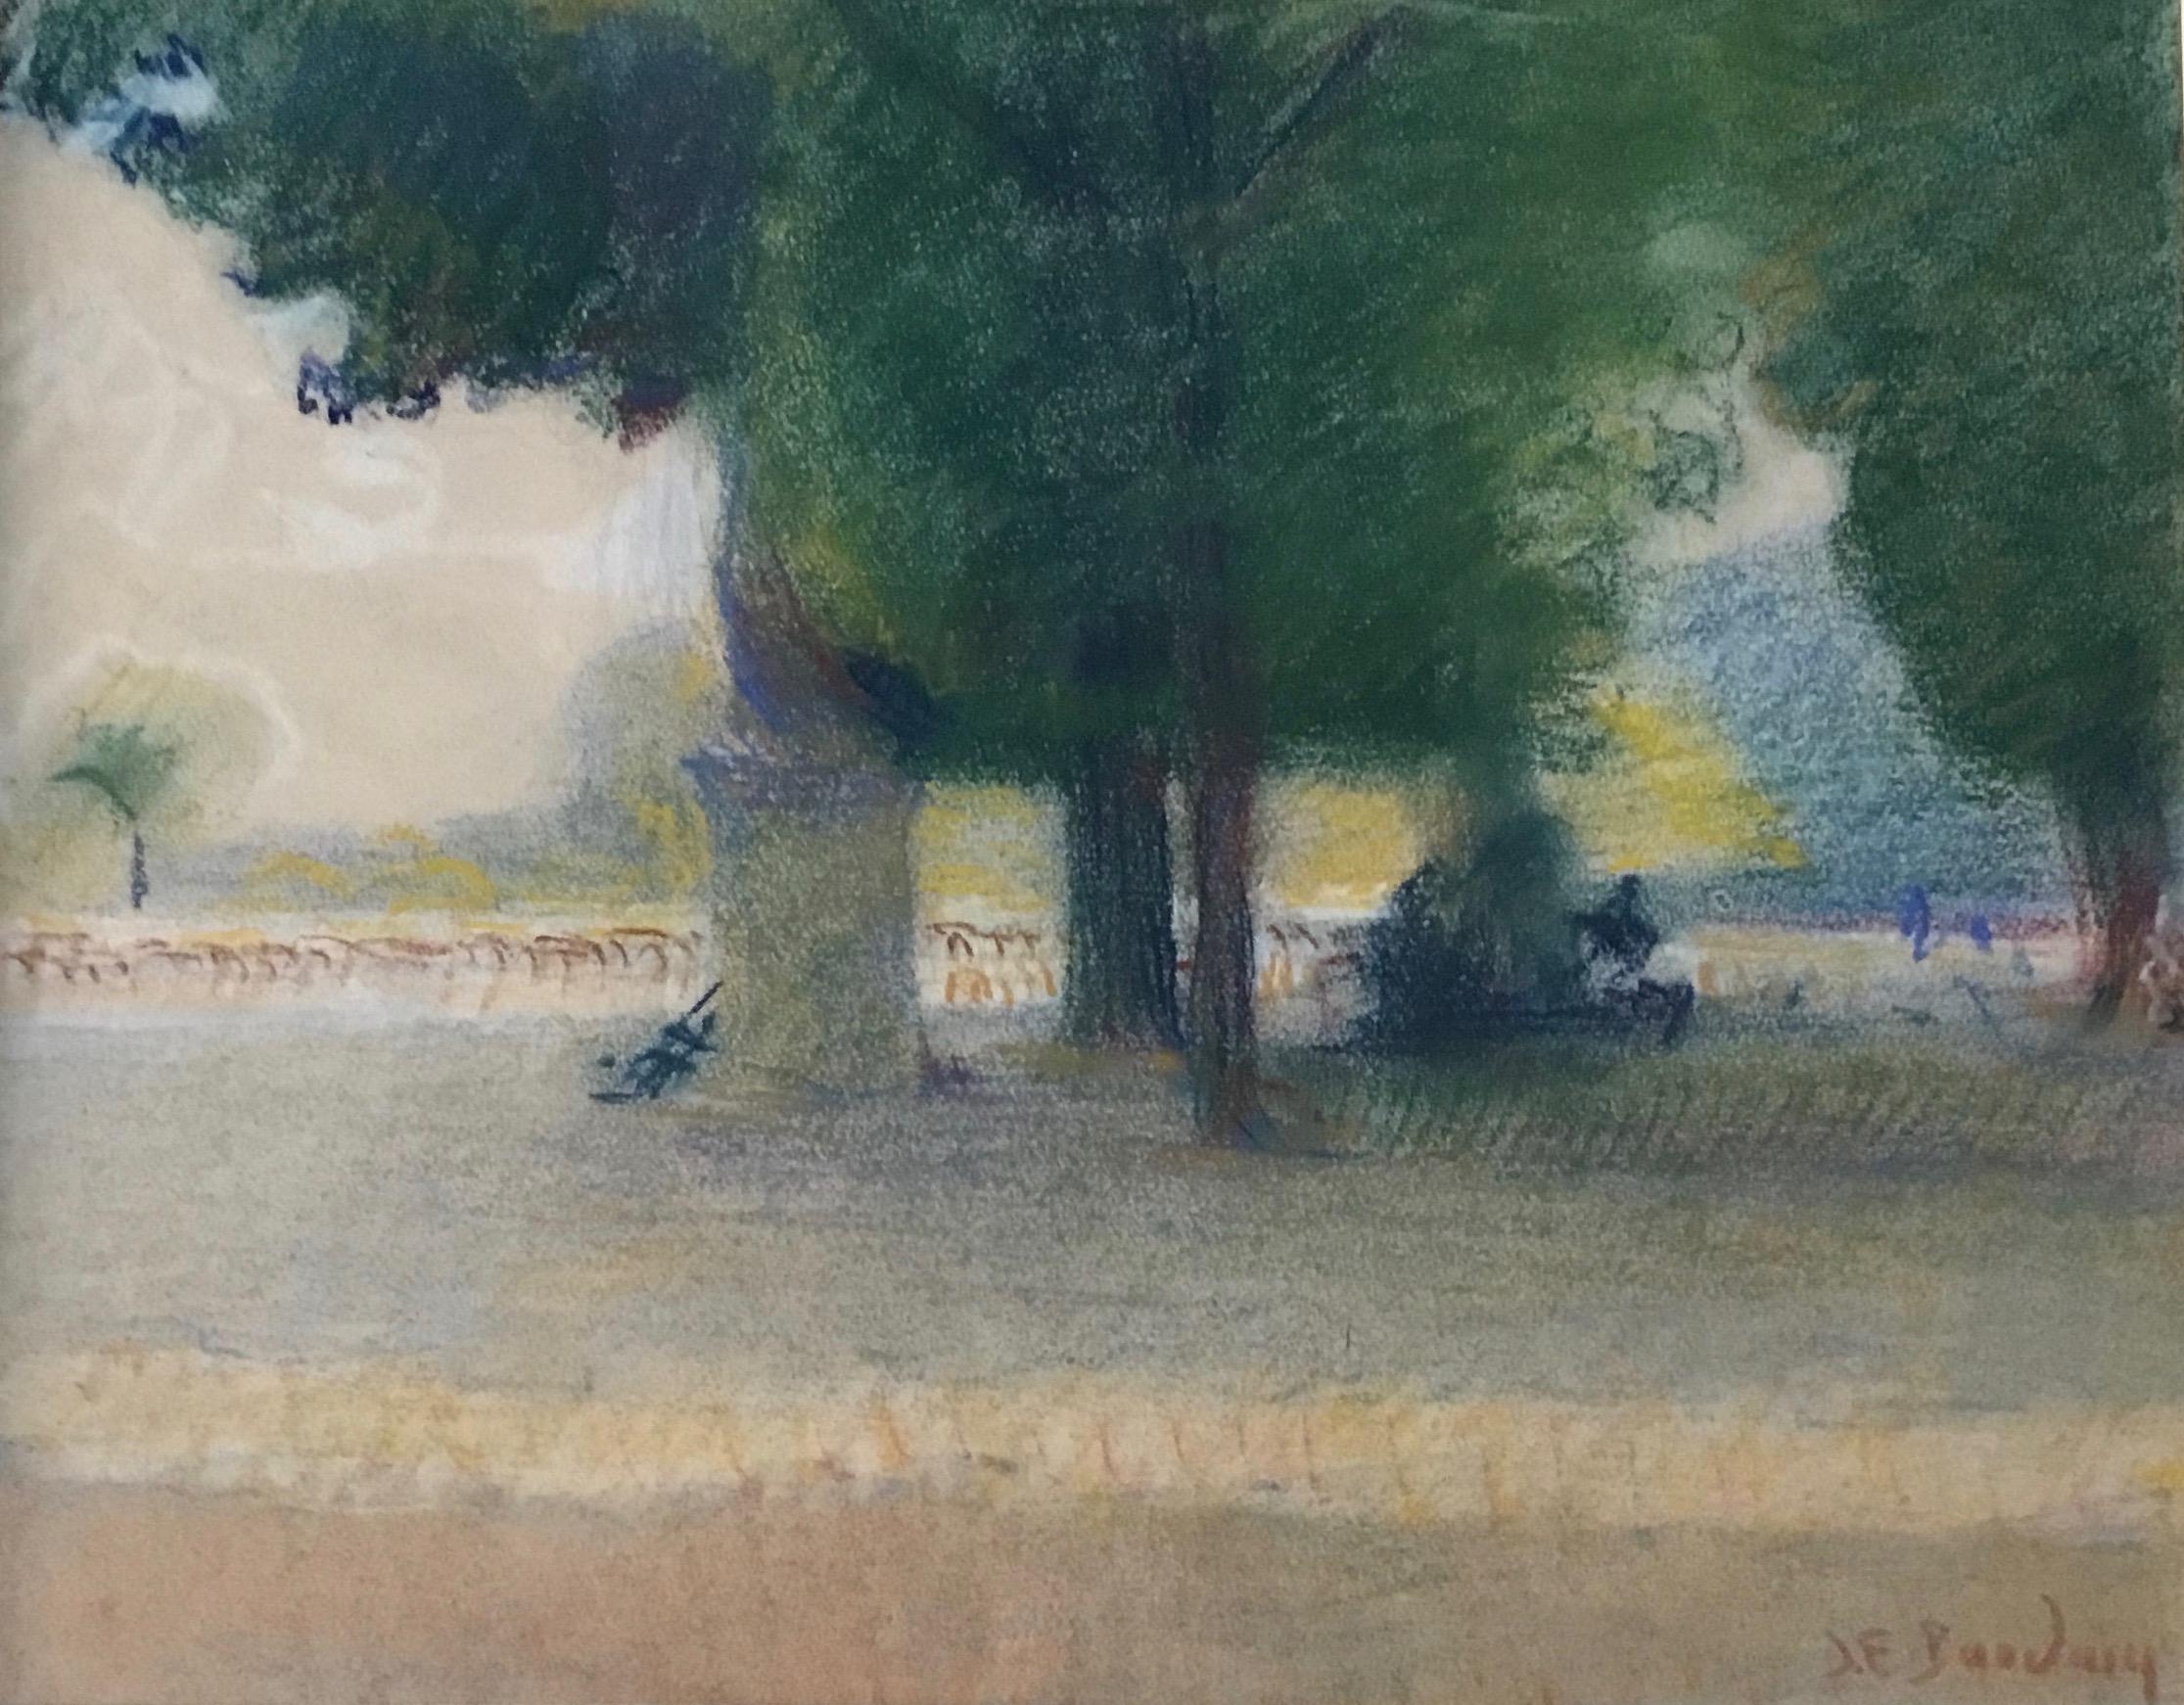 LUXEMBOURG GARDENS PARIS.Jean Franck Baudoin (1870-1961) post impressionist - Post-Impressionist Art by Jean-François Baudoin